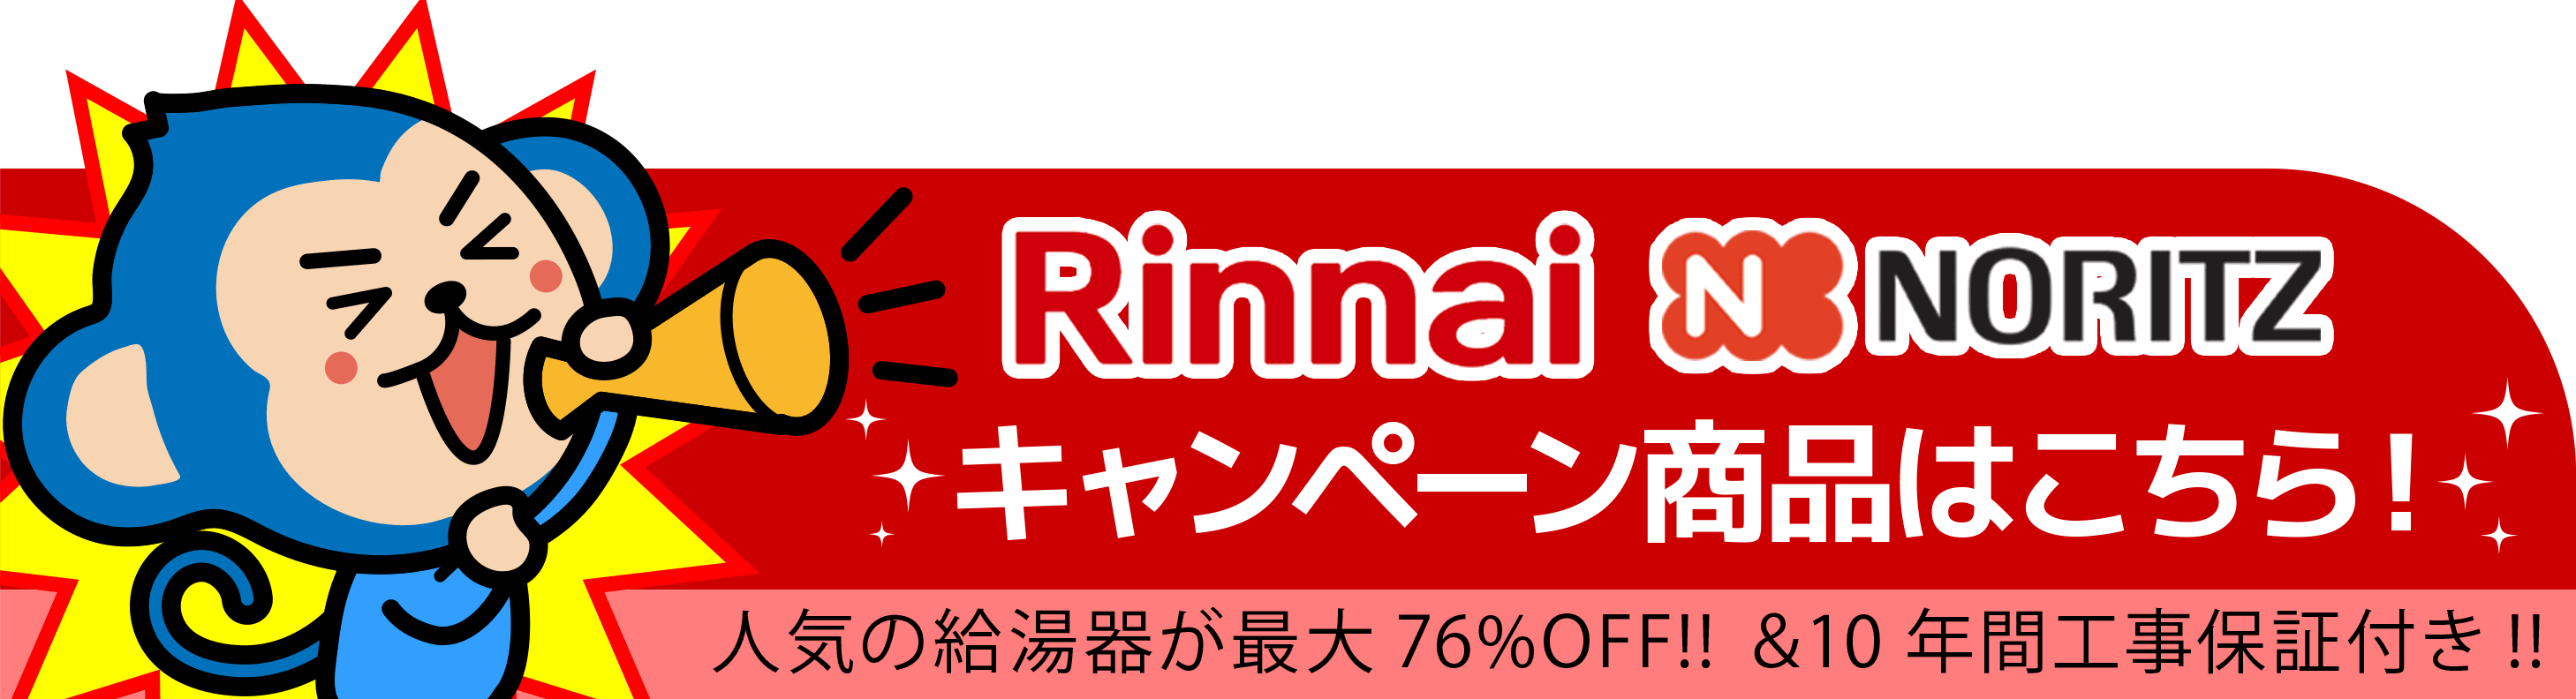 Rinnai・NORITZ給湯器キャンペーン